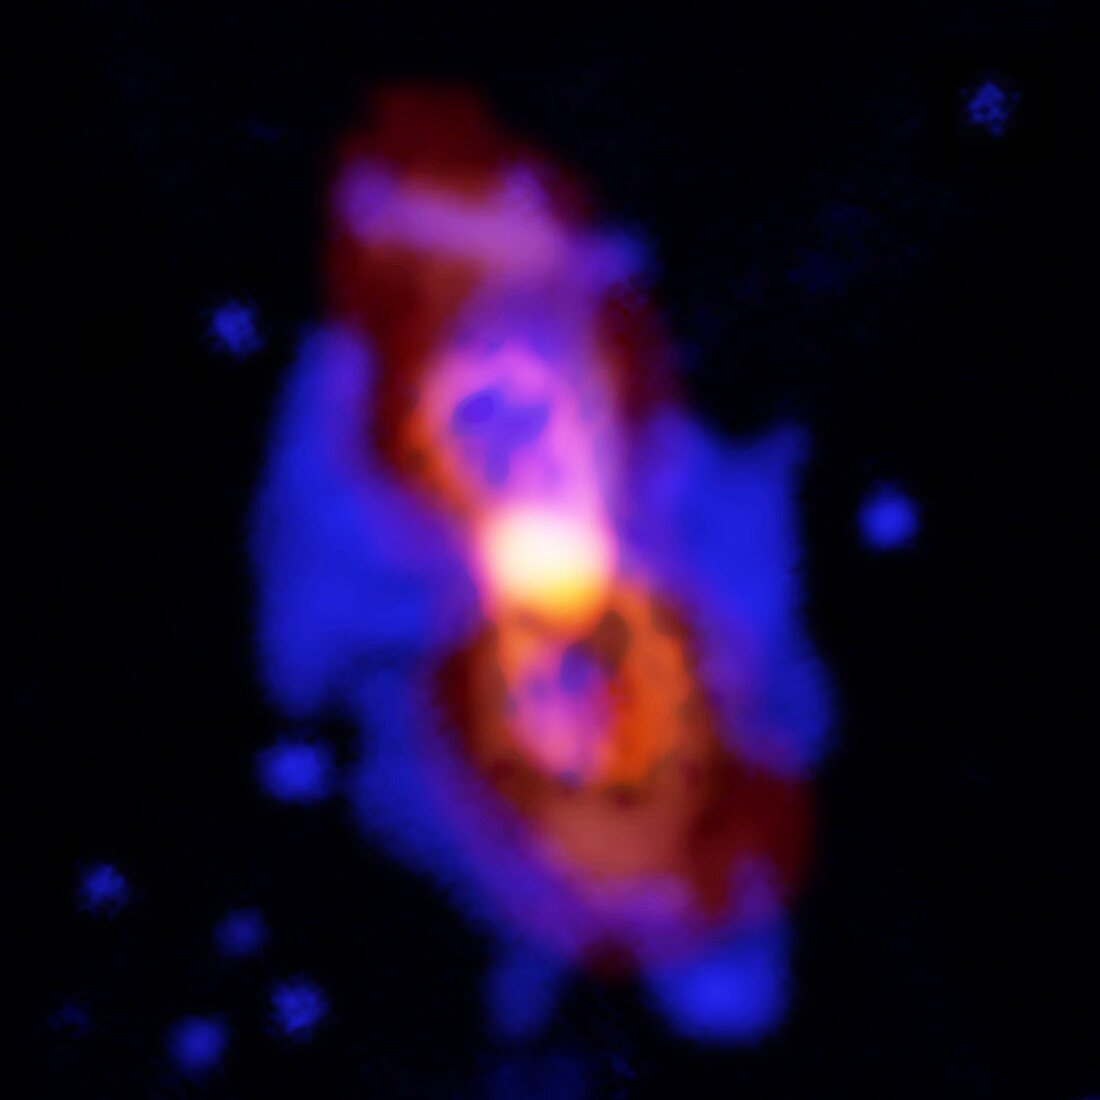 CK Vulpeculae stellar collision, composite image